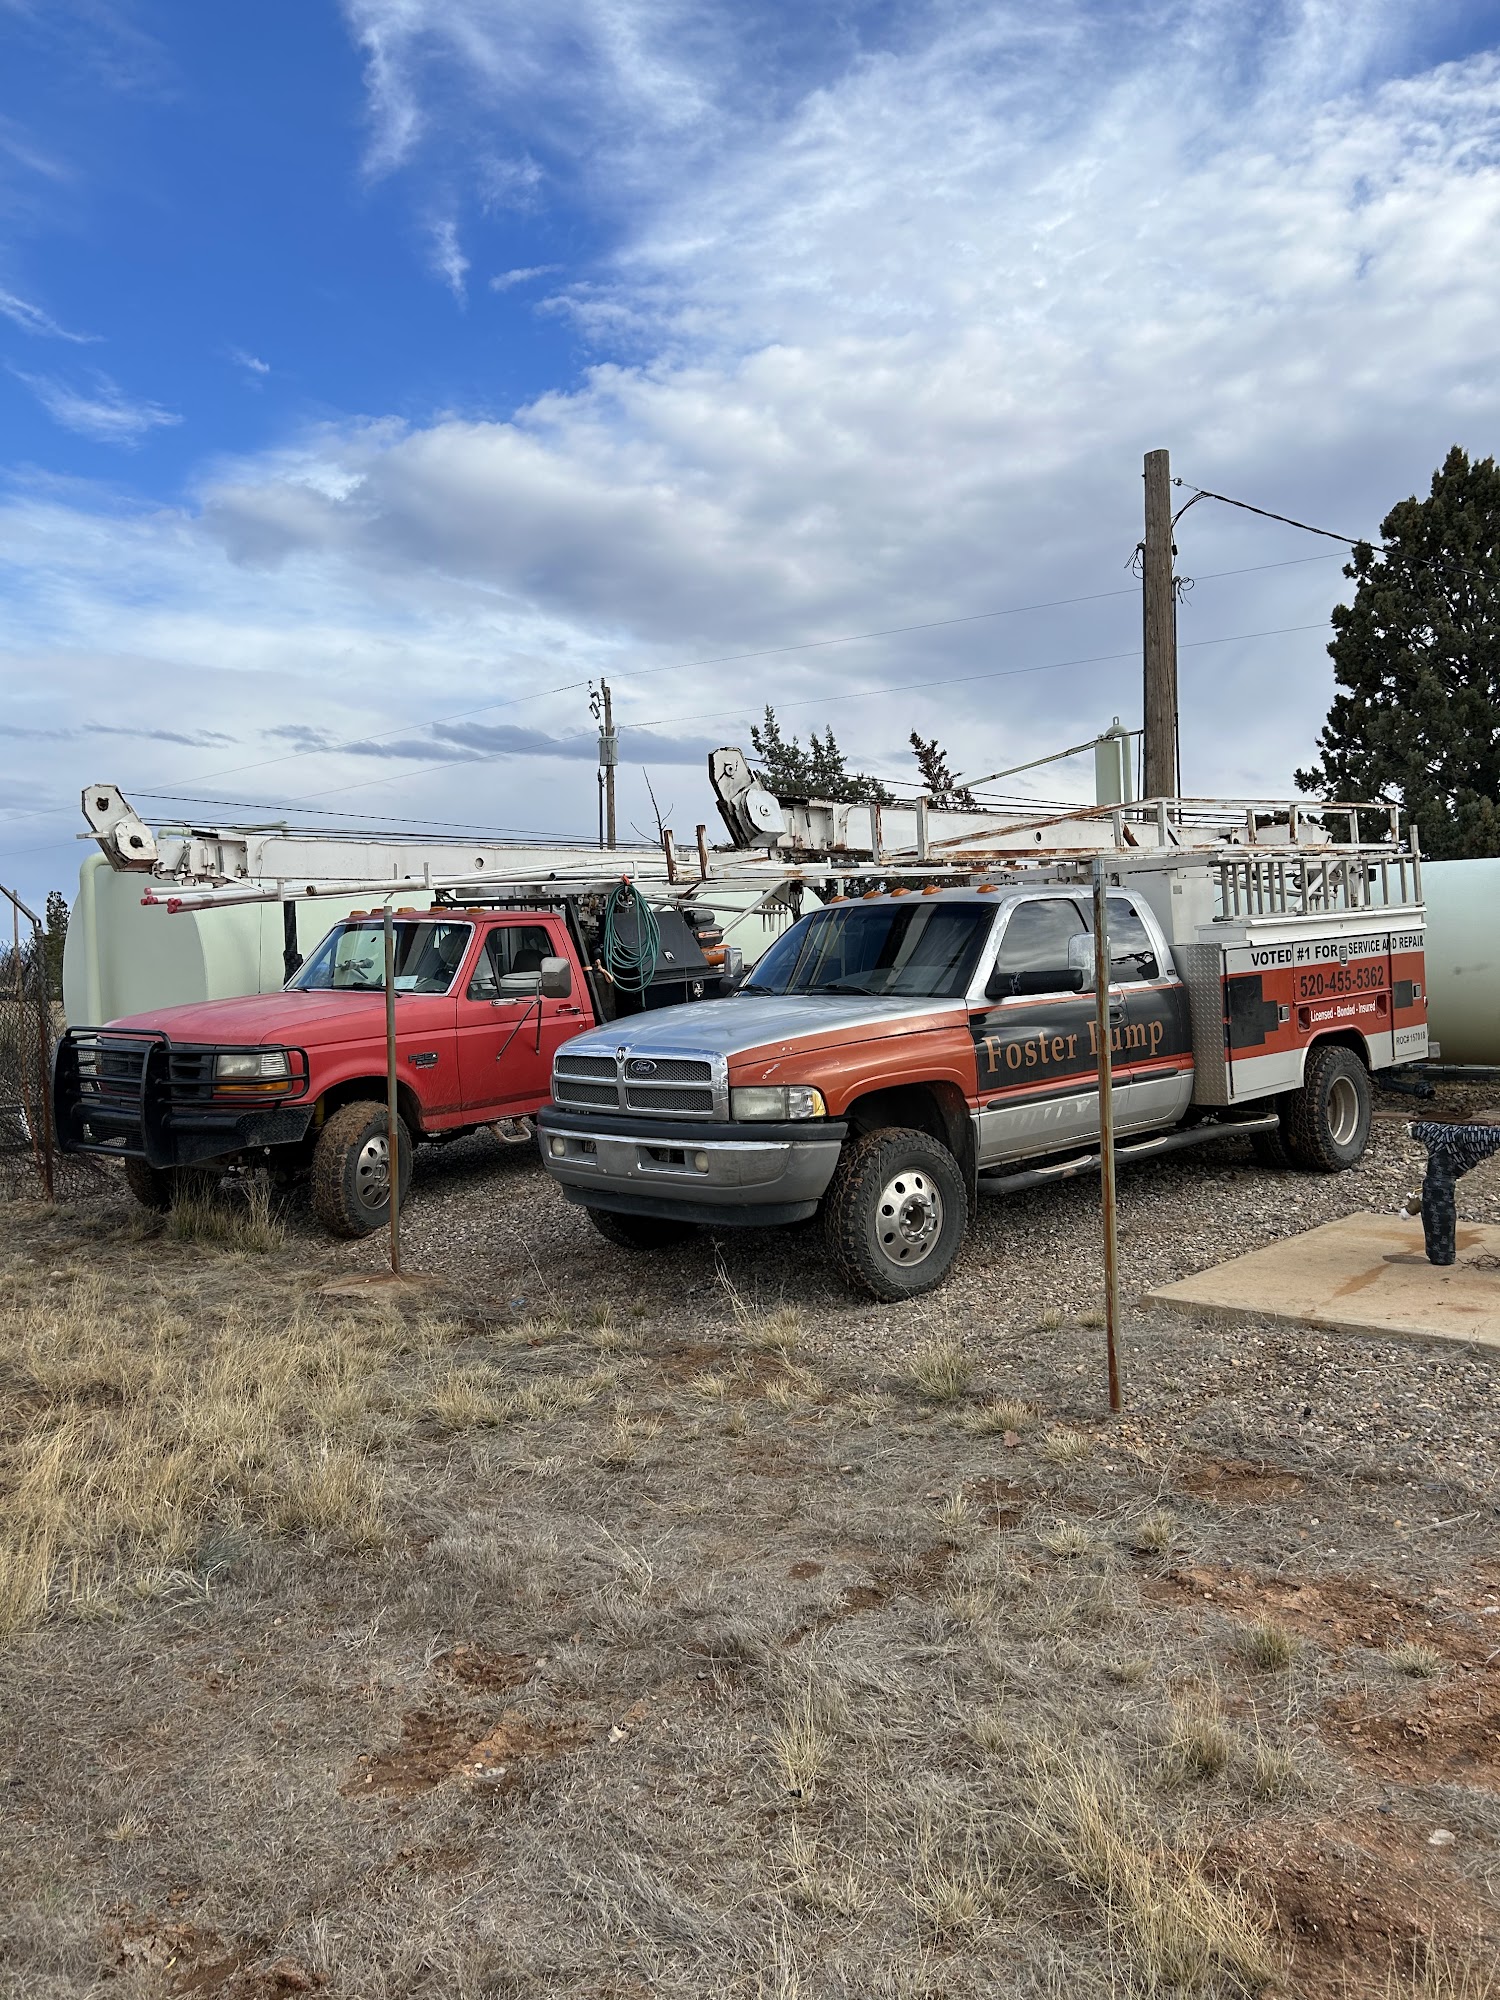 Foster Pump Sales & Services 182 AZ-82, Whetstone Arizona 85616